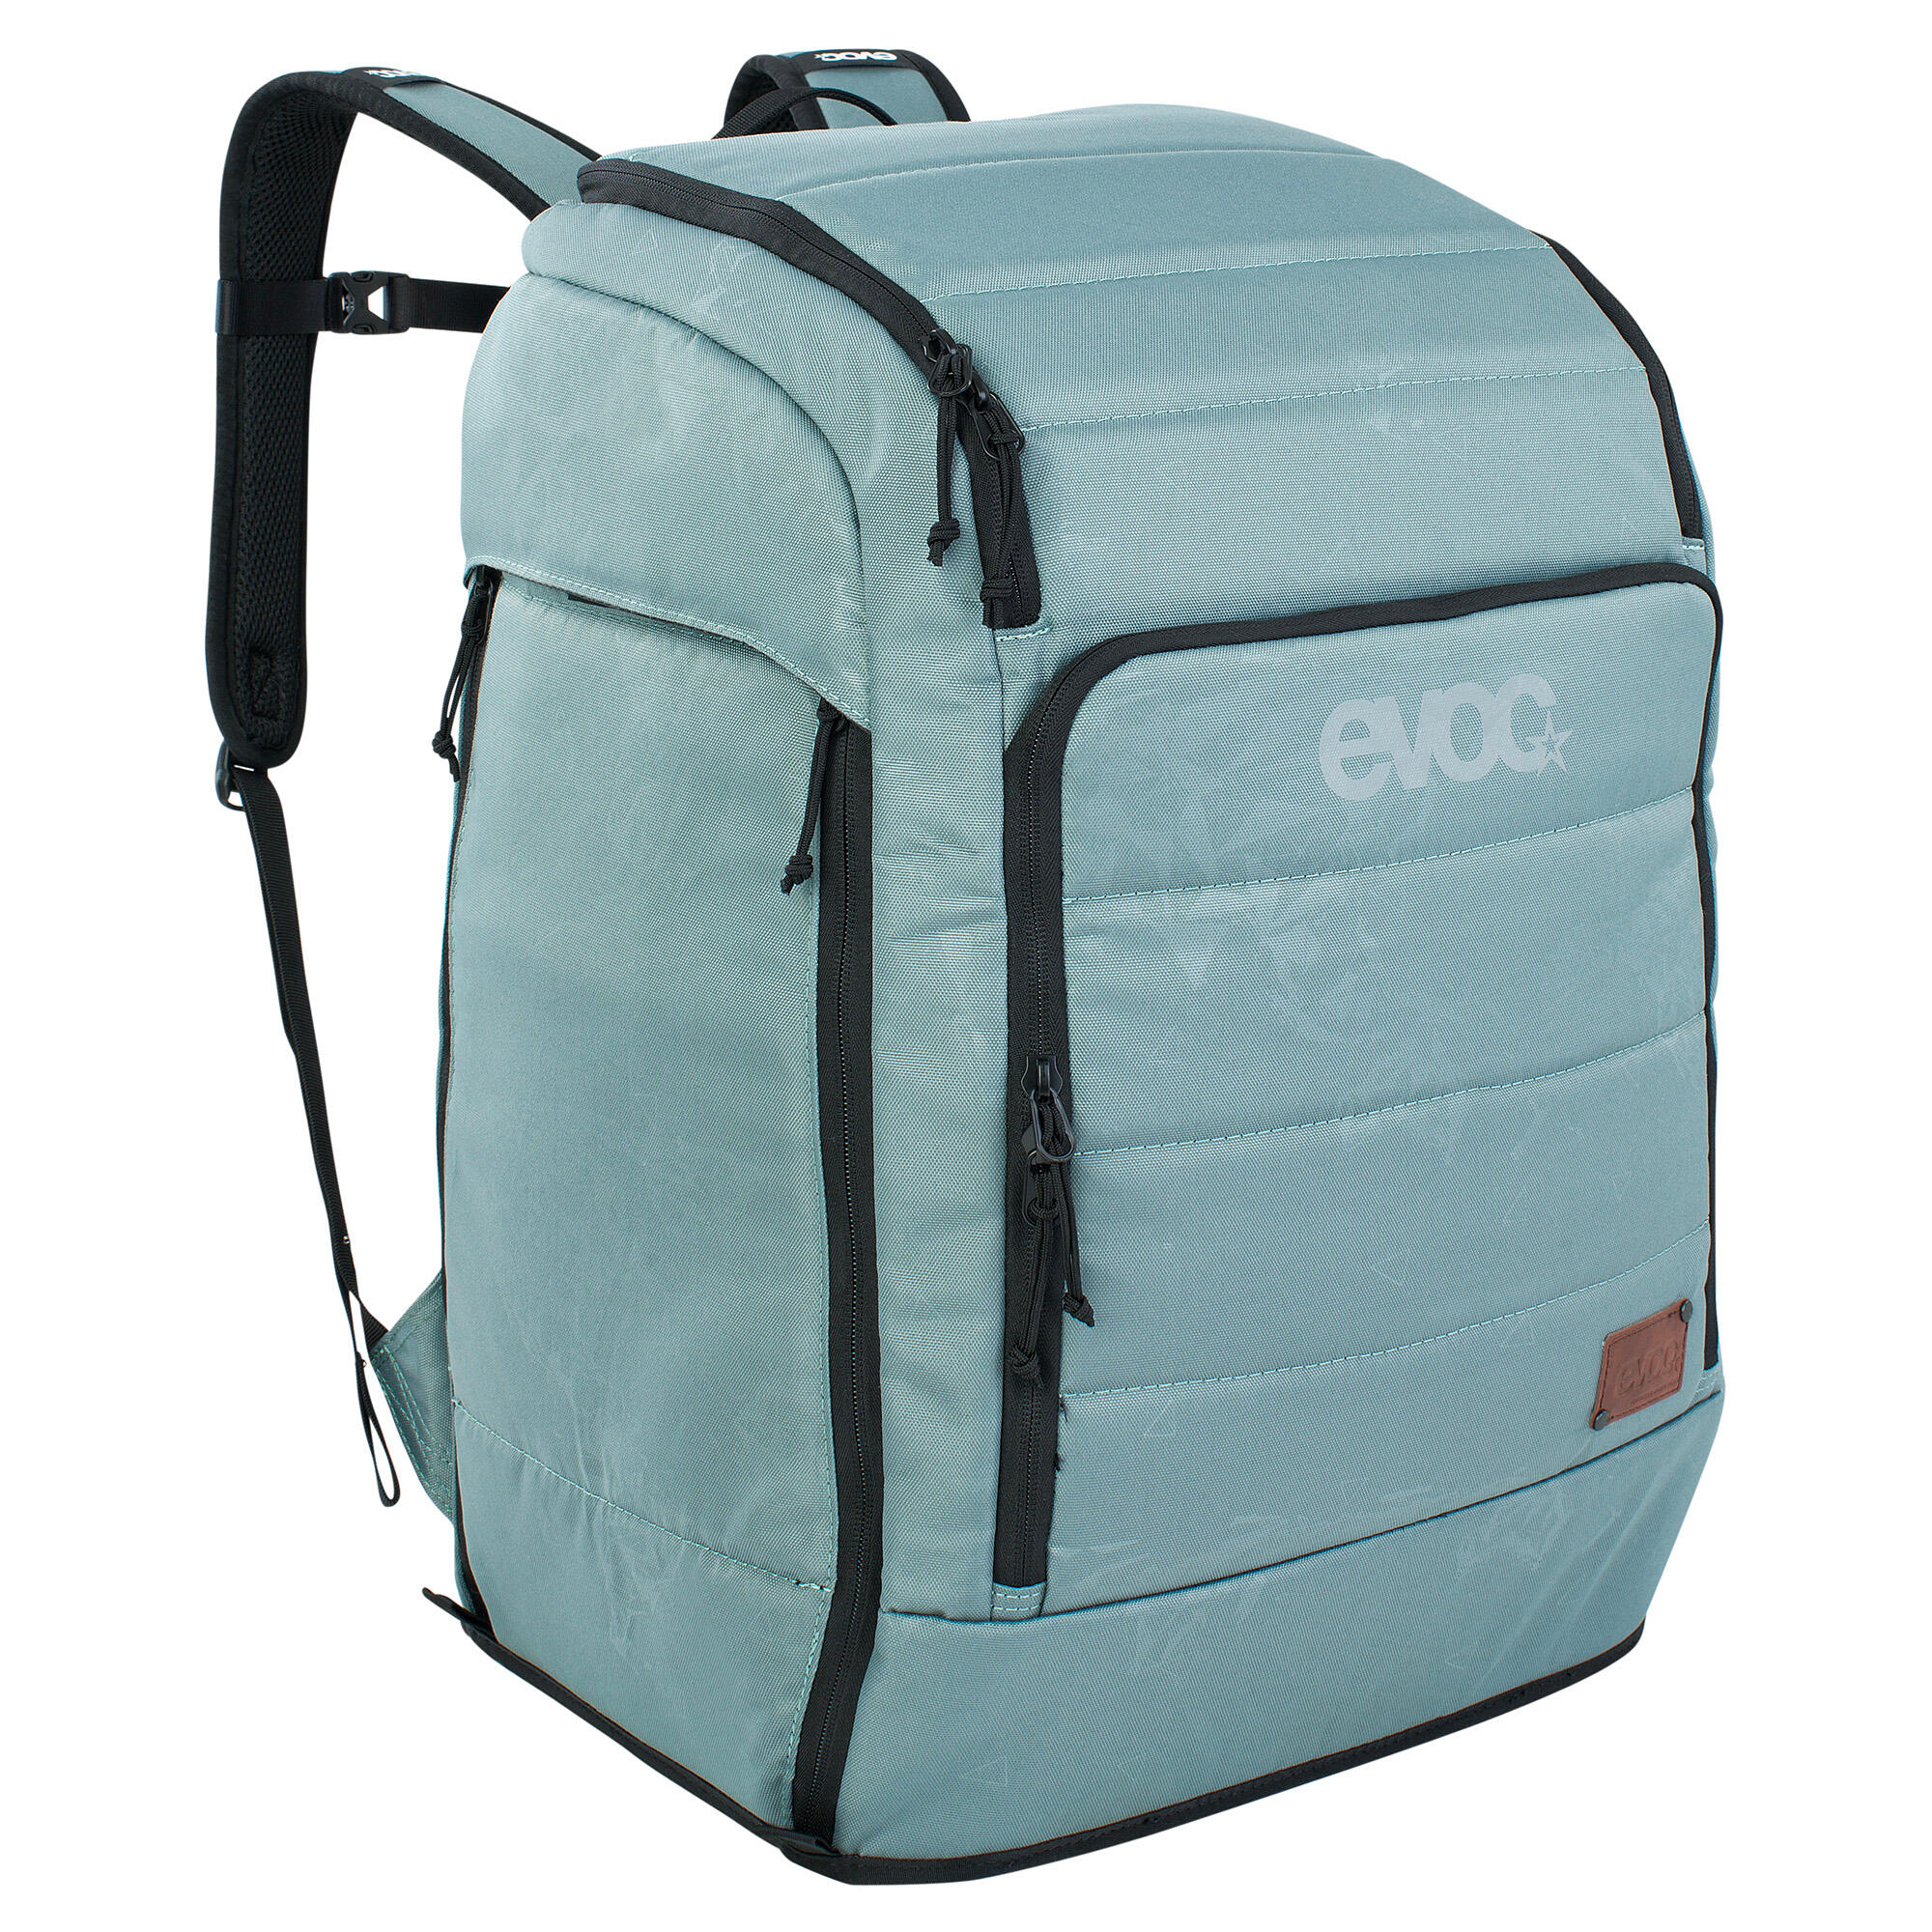 EVOC EVOC Gear Backpack